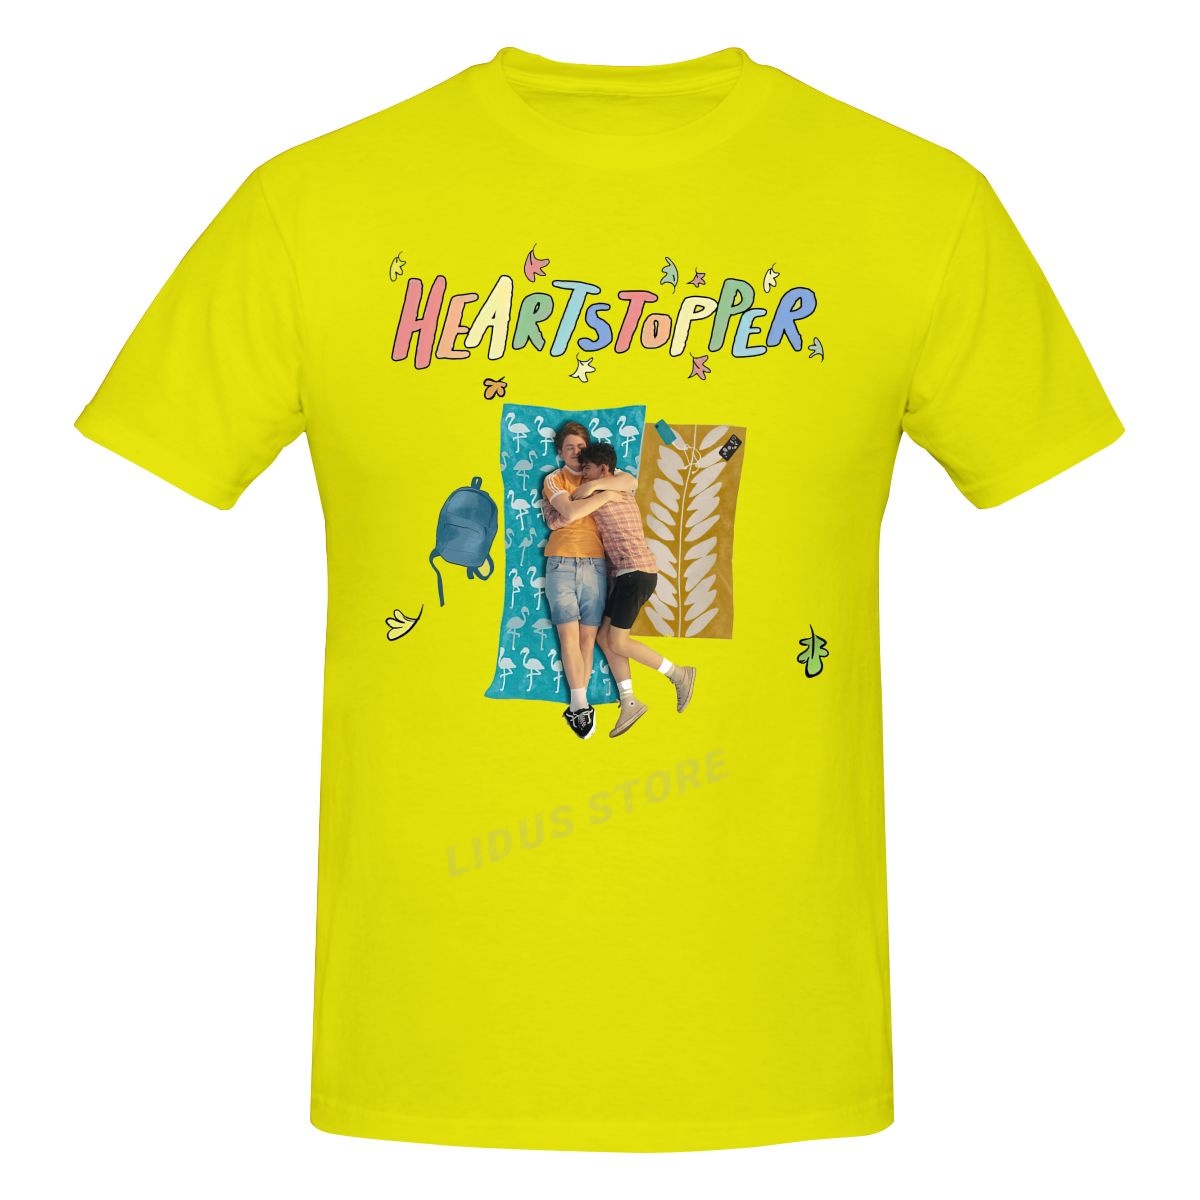 Fun Nick And Charlie Heartstopper T Shirt Clothing Graphics Tshirt Short Sleeve Sweatshirt undershirt Unisex Shirt Tee